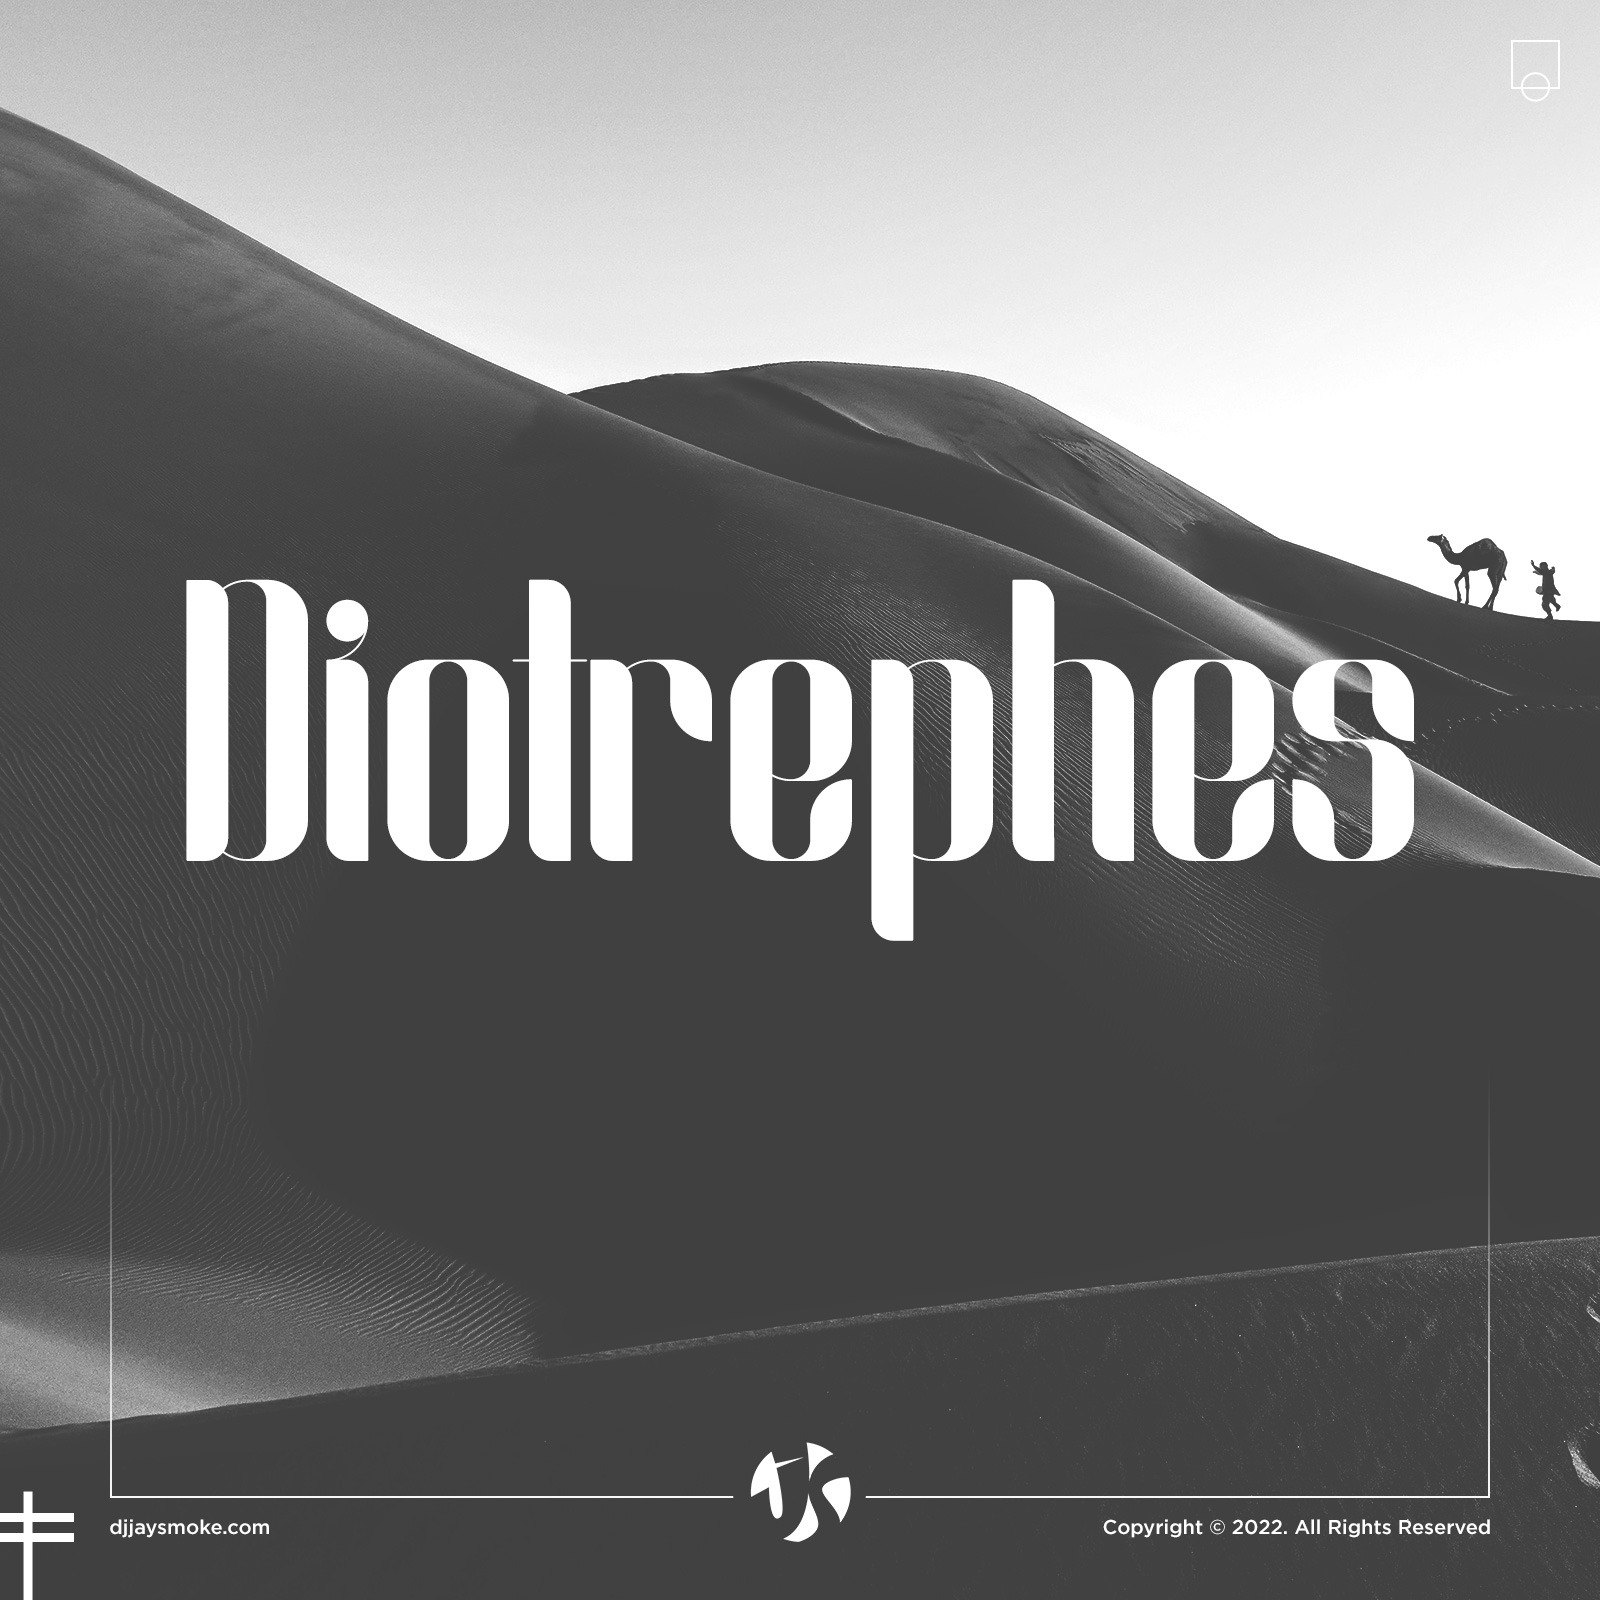 Diotrephes (Hip-Hop Beat)